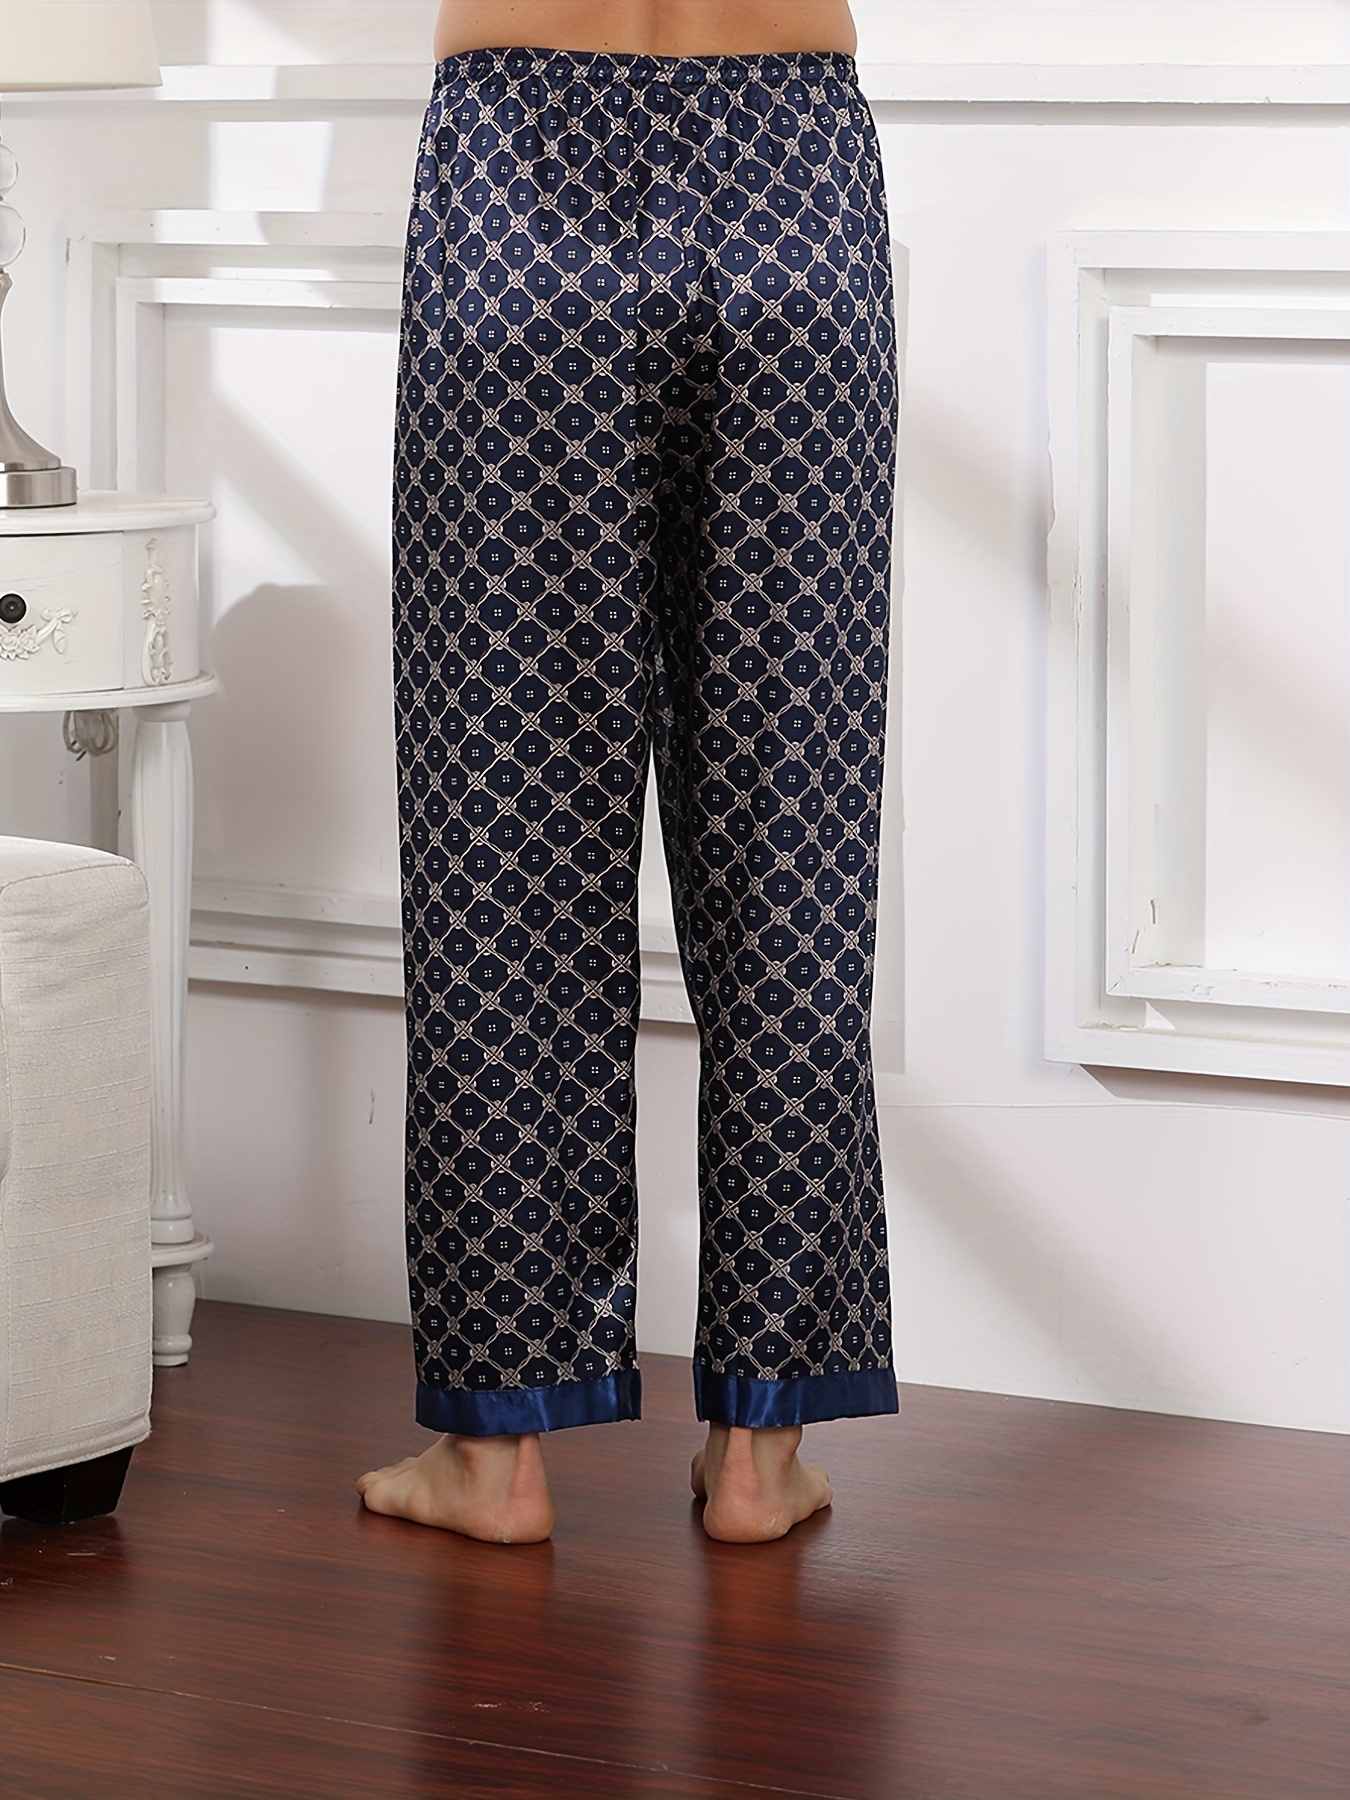 Floral Comfortable Long Casual Pants, Men's Pajama Pants For Home